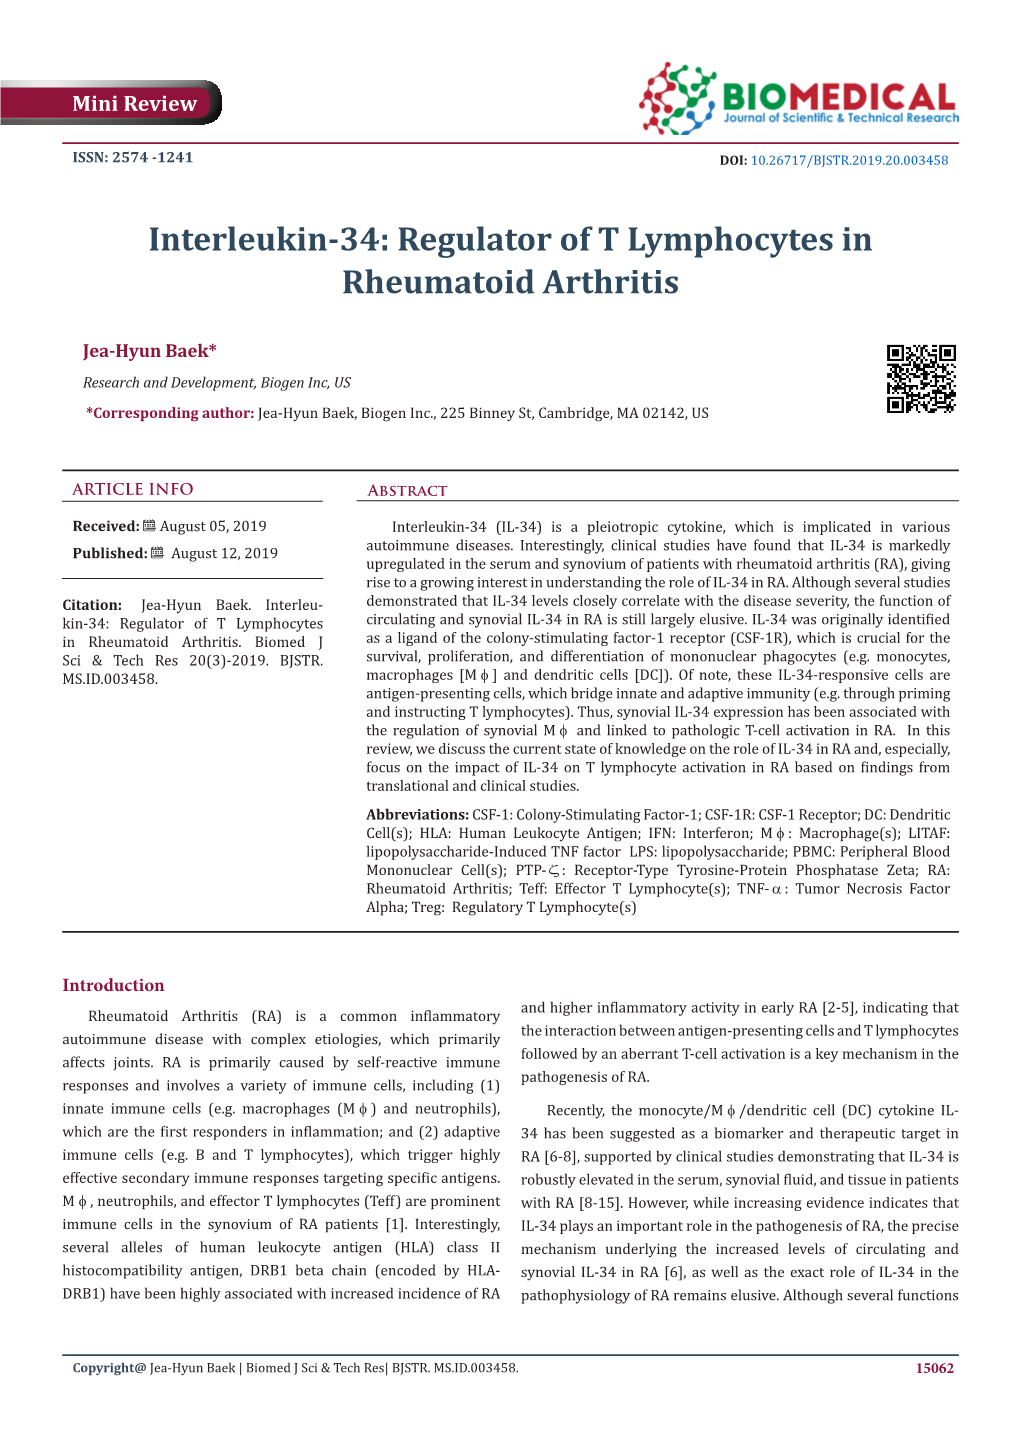 Interleukin-34: Regulator of T Lymphocytes in Rheumatoid Arthritis